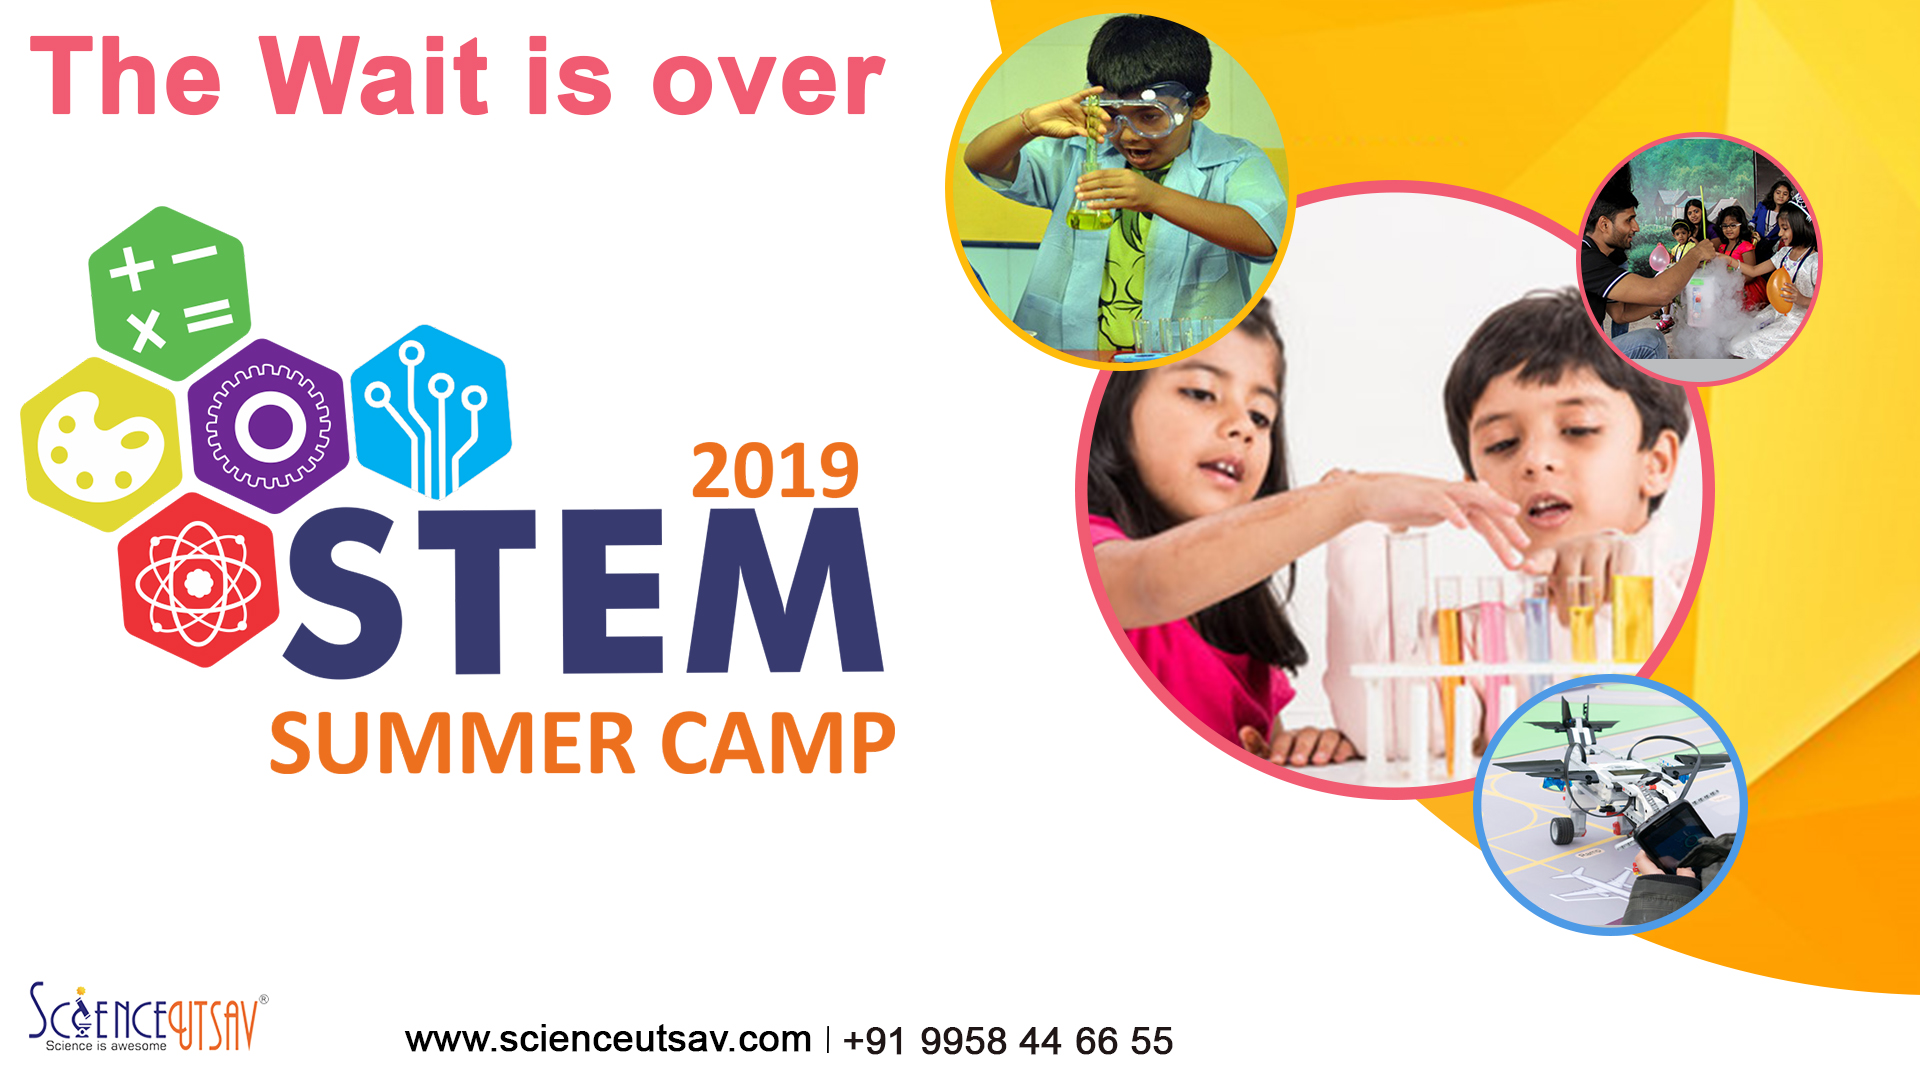 Summer Camp in 2019 Dombivli (West),Mumbai-junior inventor, Mumbai, Maharashtra, India